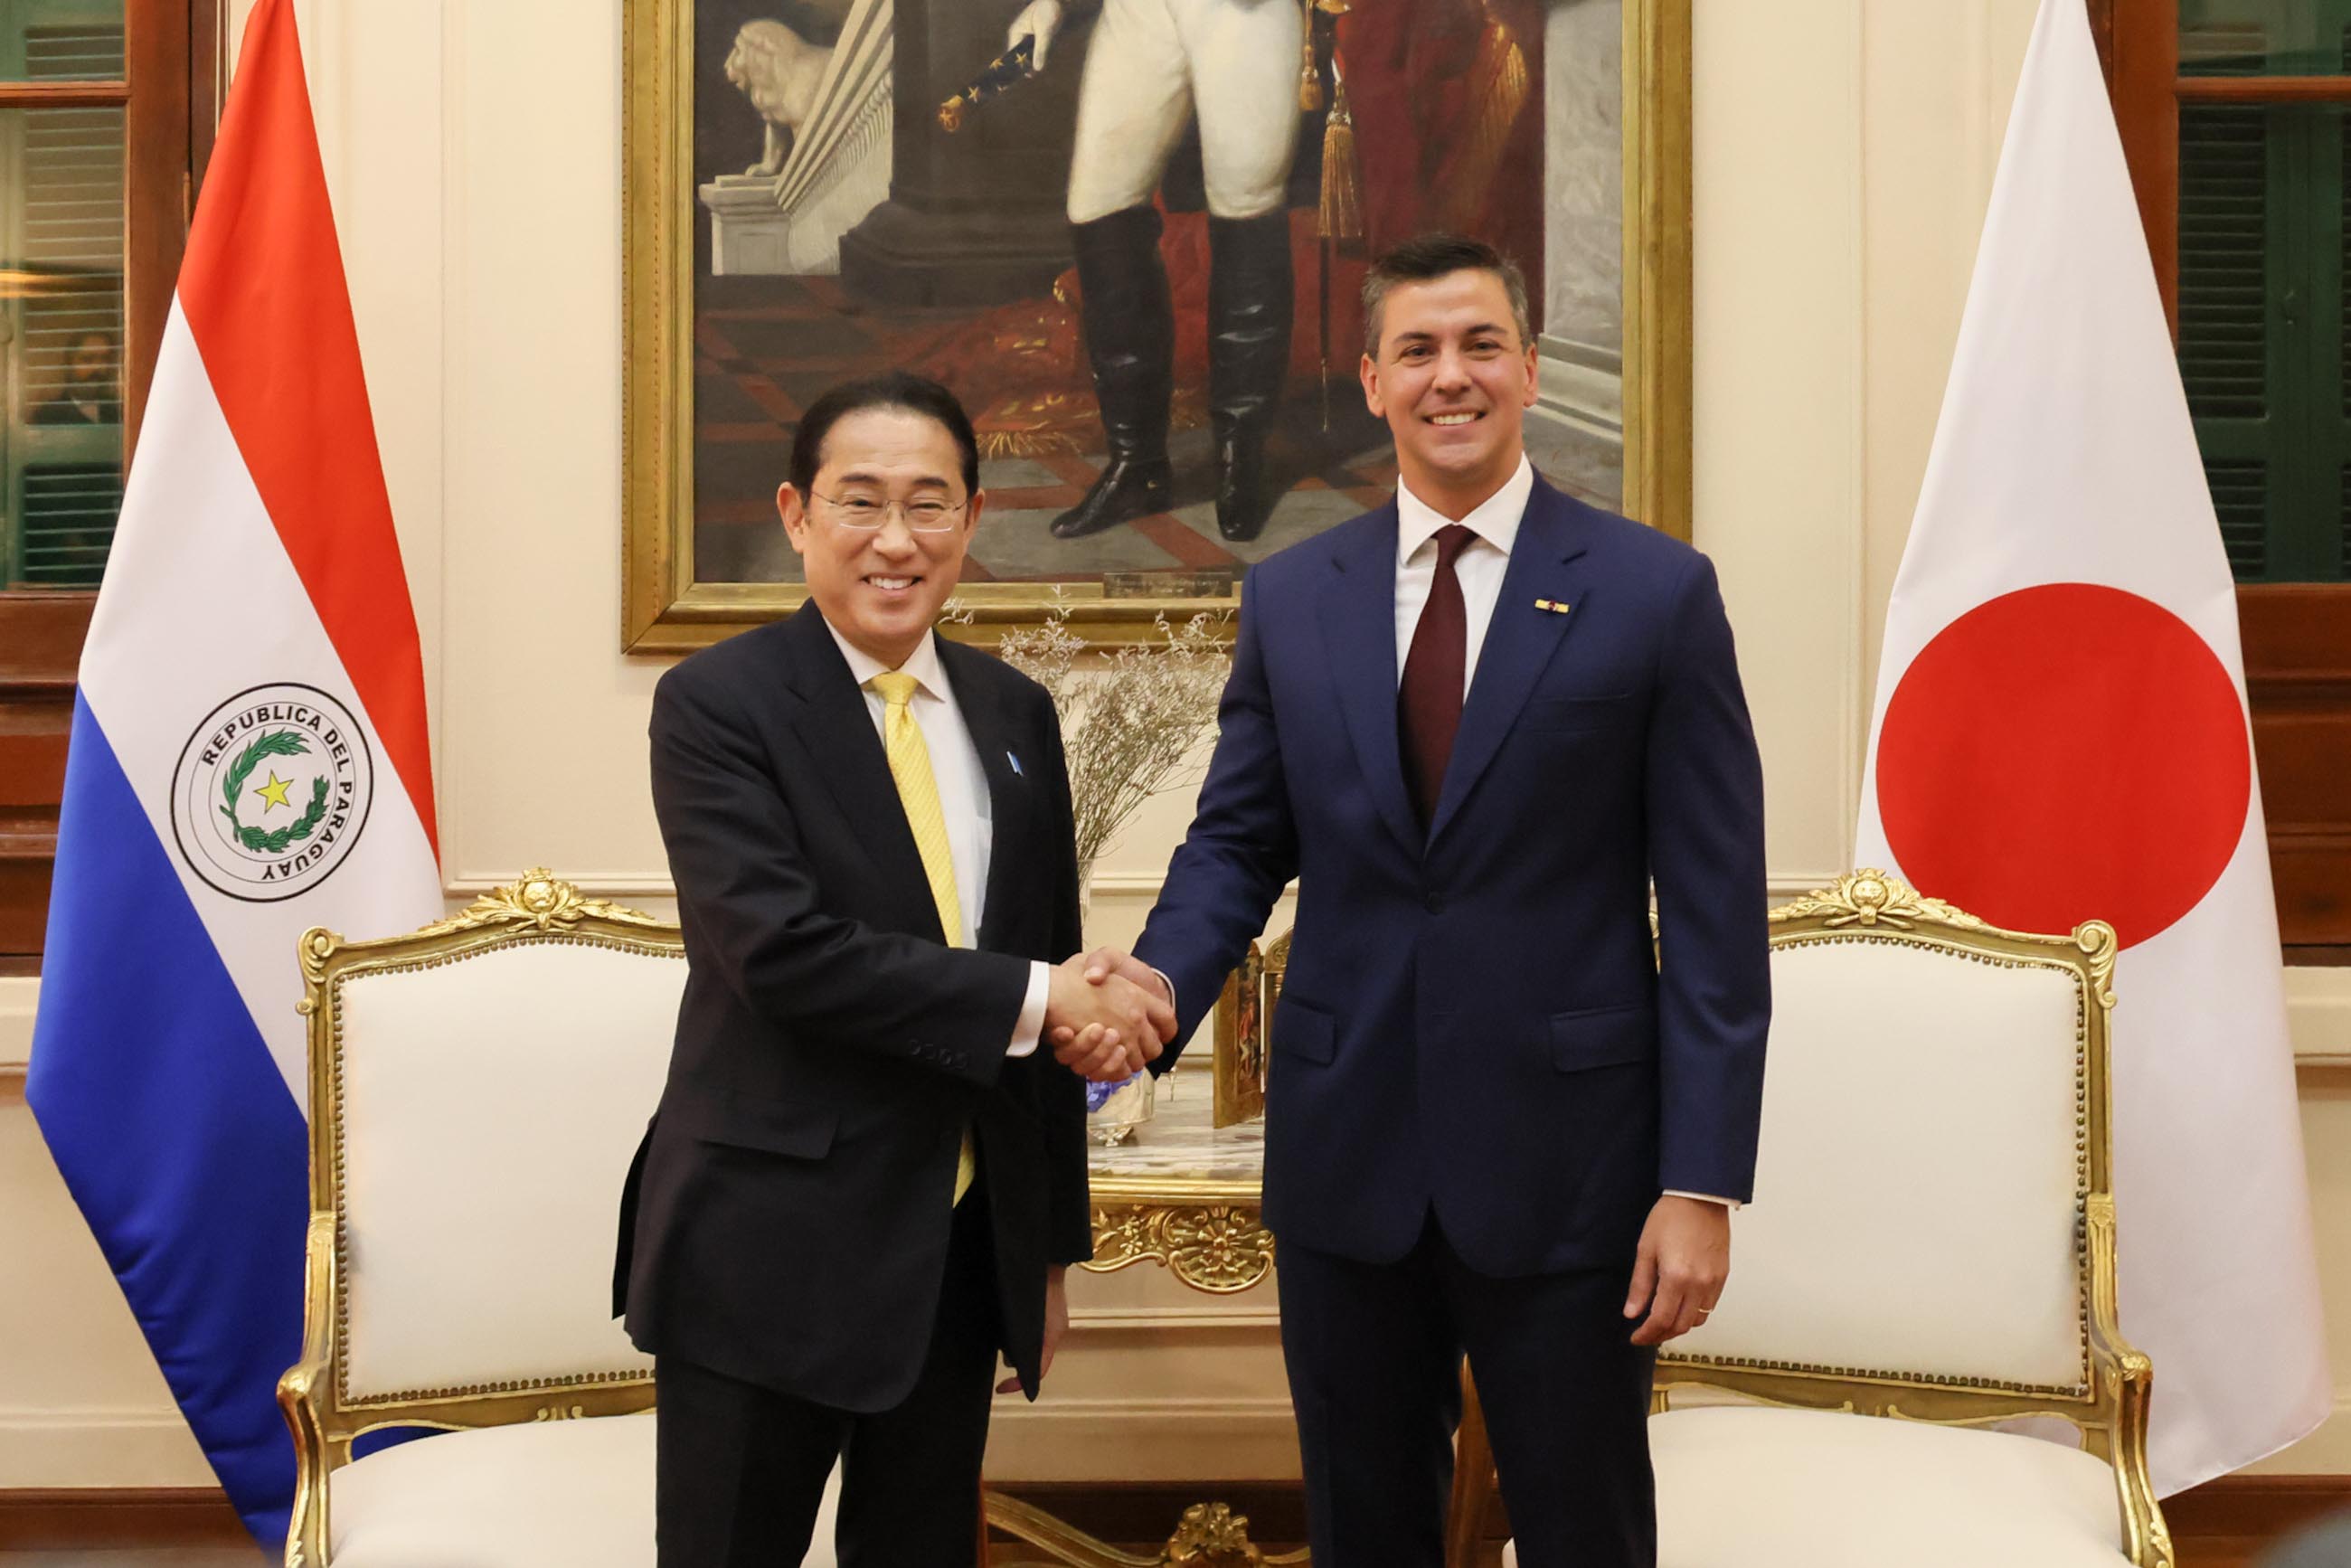 Japan-Paraguay Summit Meeting (small group meeting) (1)